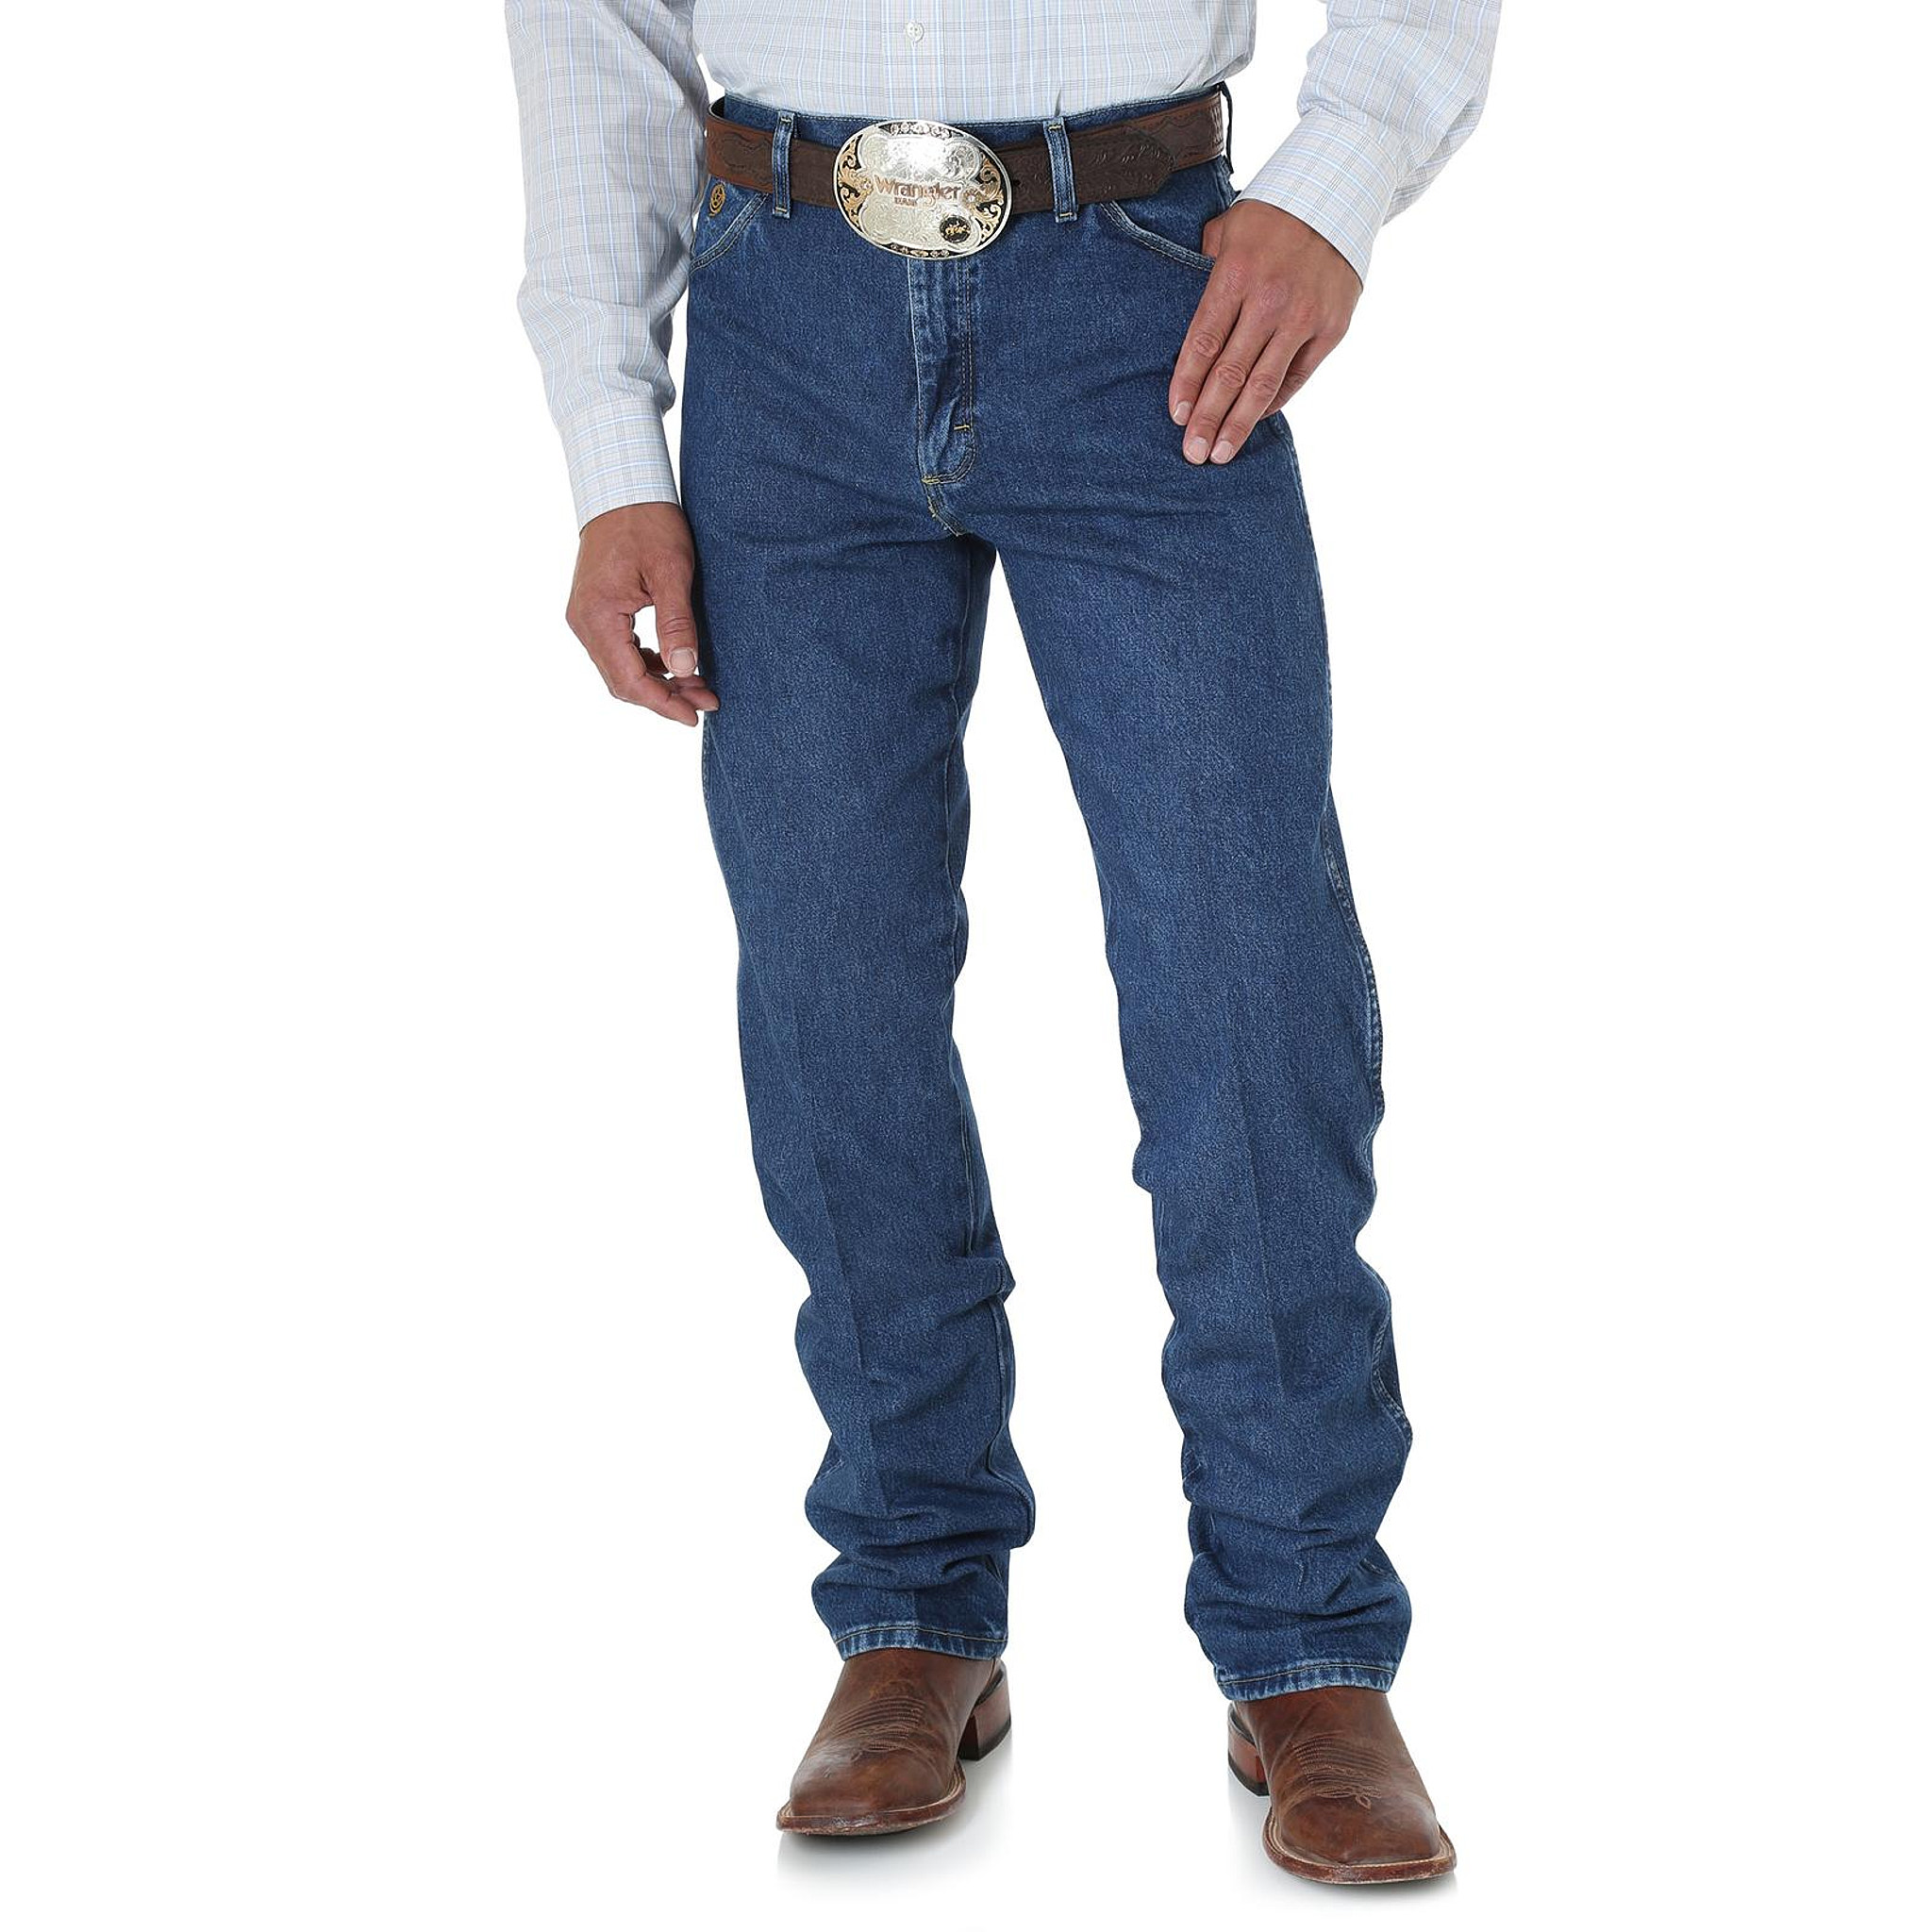 Wrangler George Strait Regular Fit - Mens Jeans  - 13Mgshd - image 3 of 4